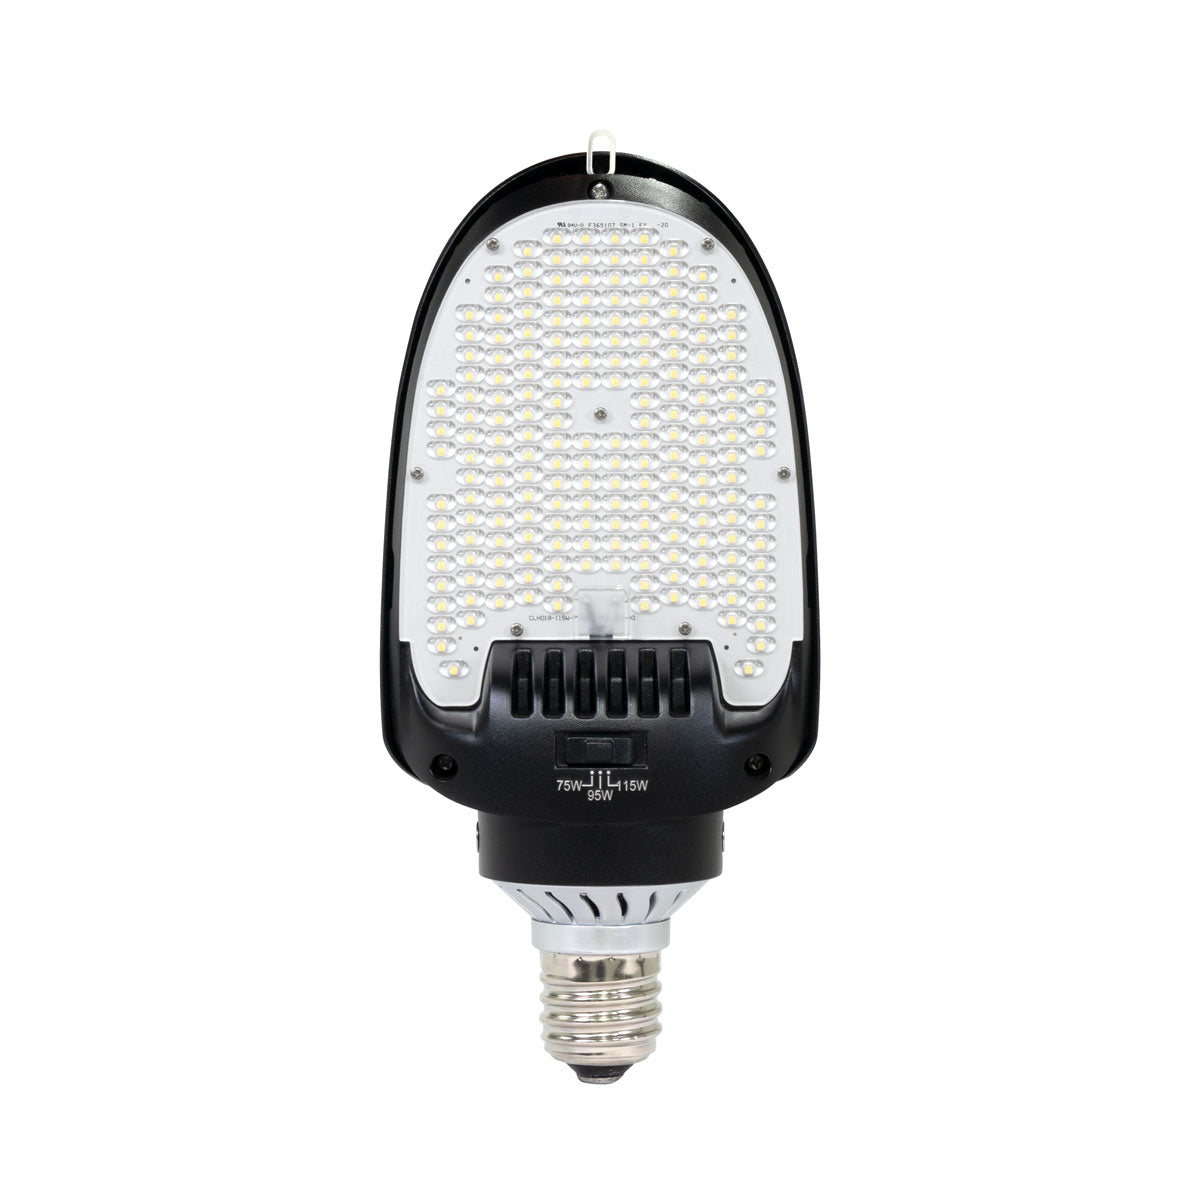 Flat Corn Light - Wattage Selectable: 115W/95W/75W - Up to 16,100 lumens